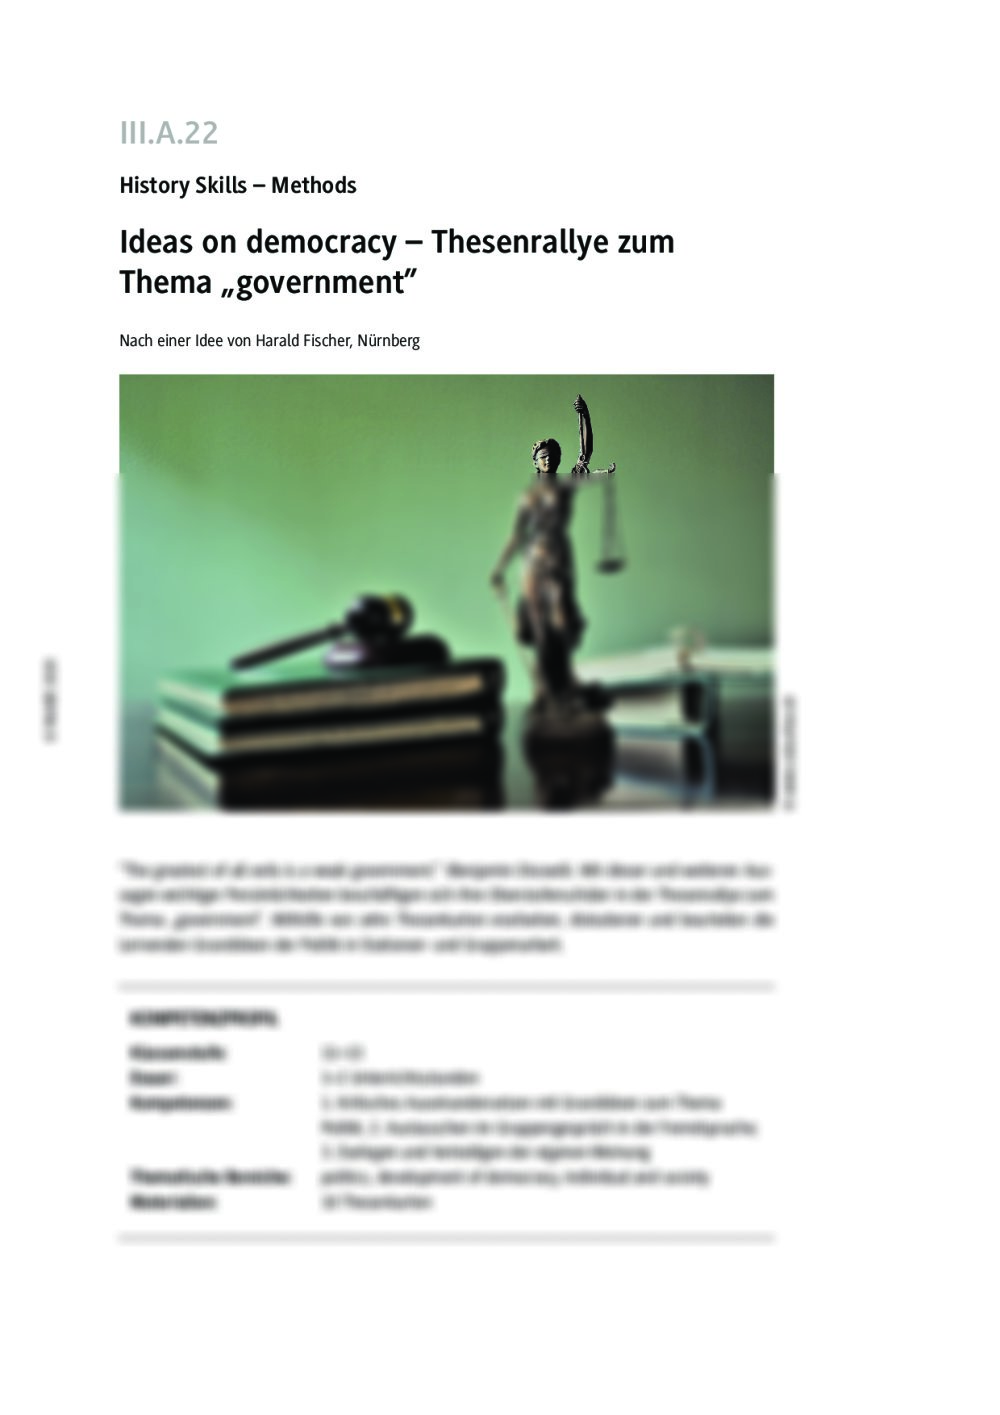 Ideas on democracy - Seite 1